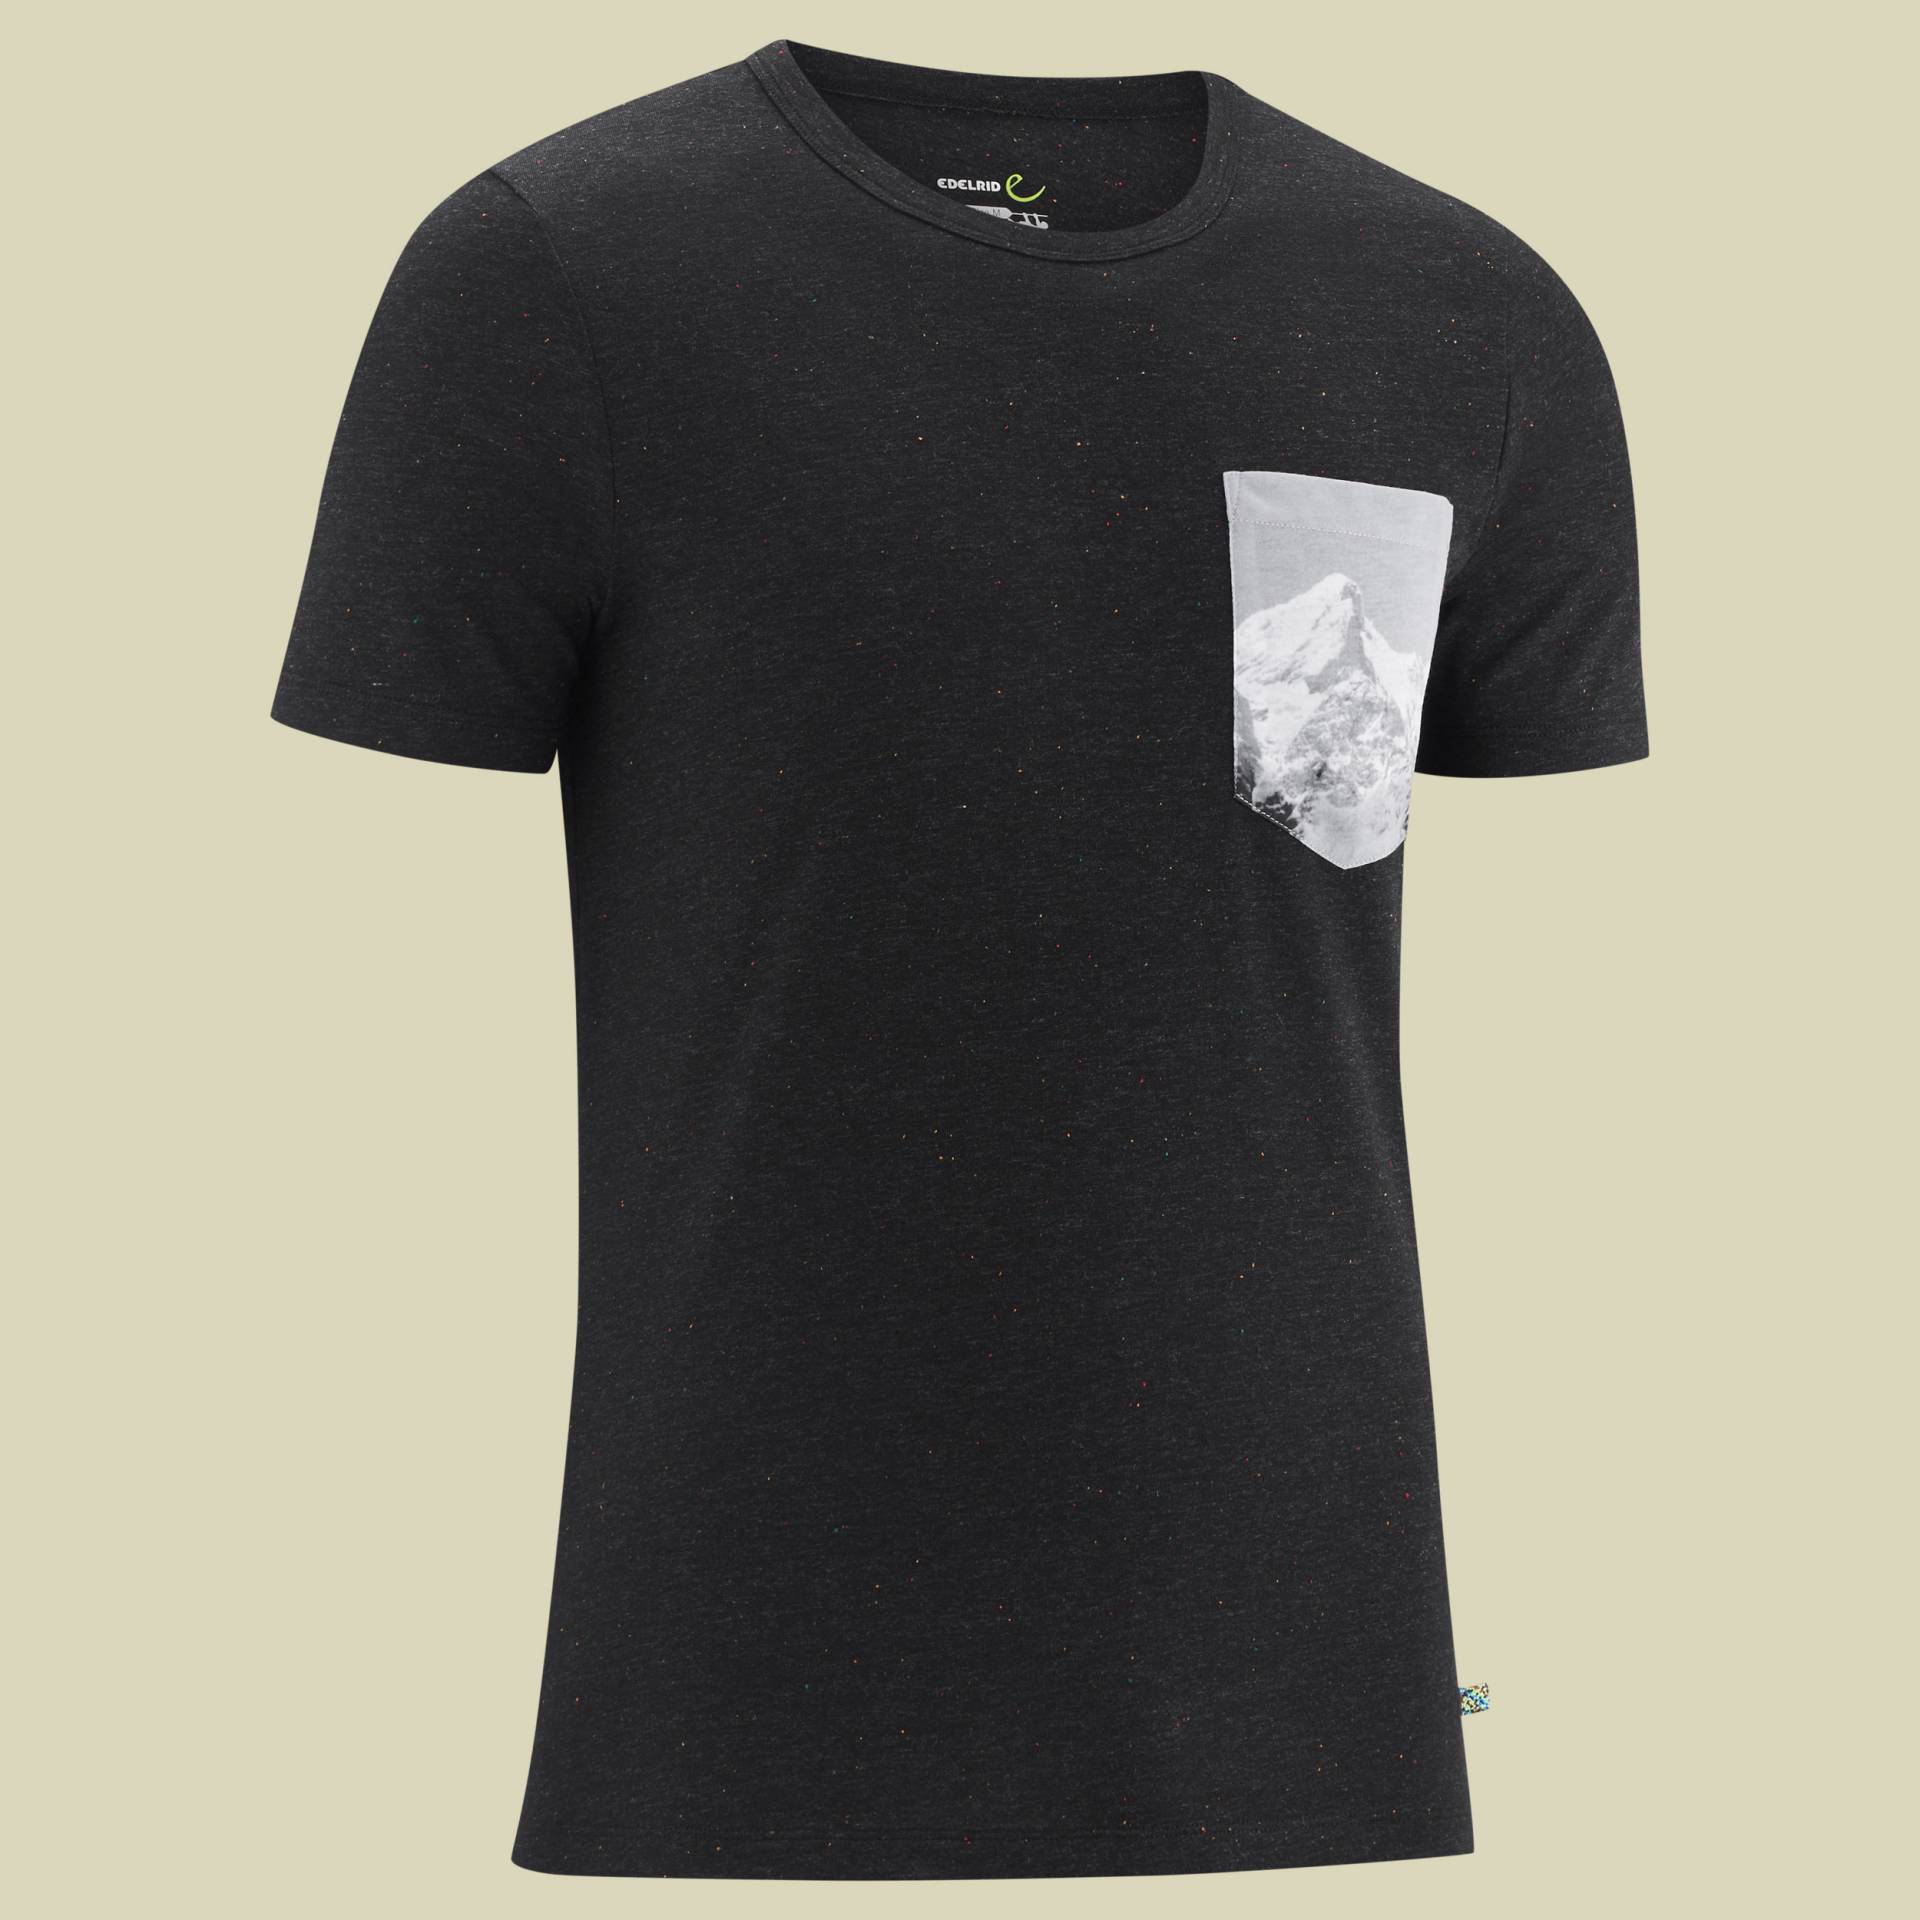 Onset T-Shirt Men L grau - obsidian von Edelrid